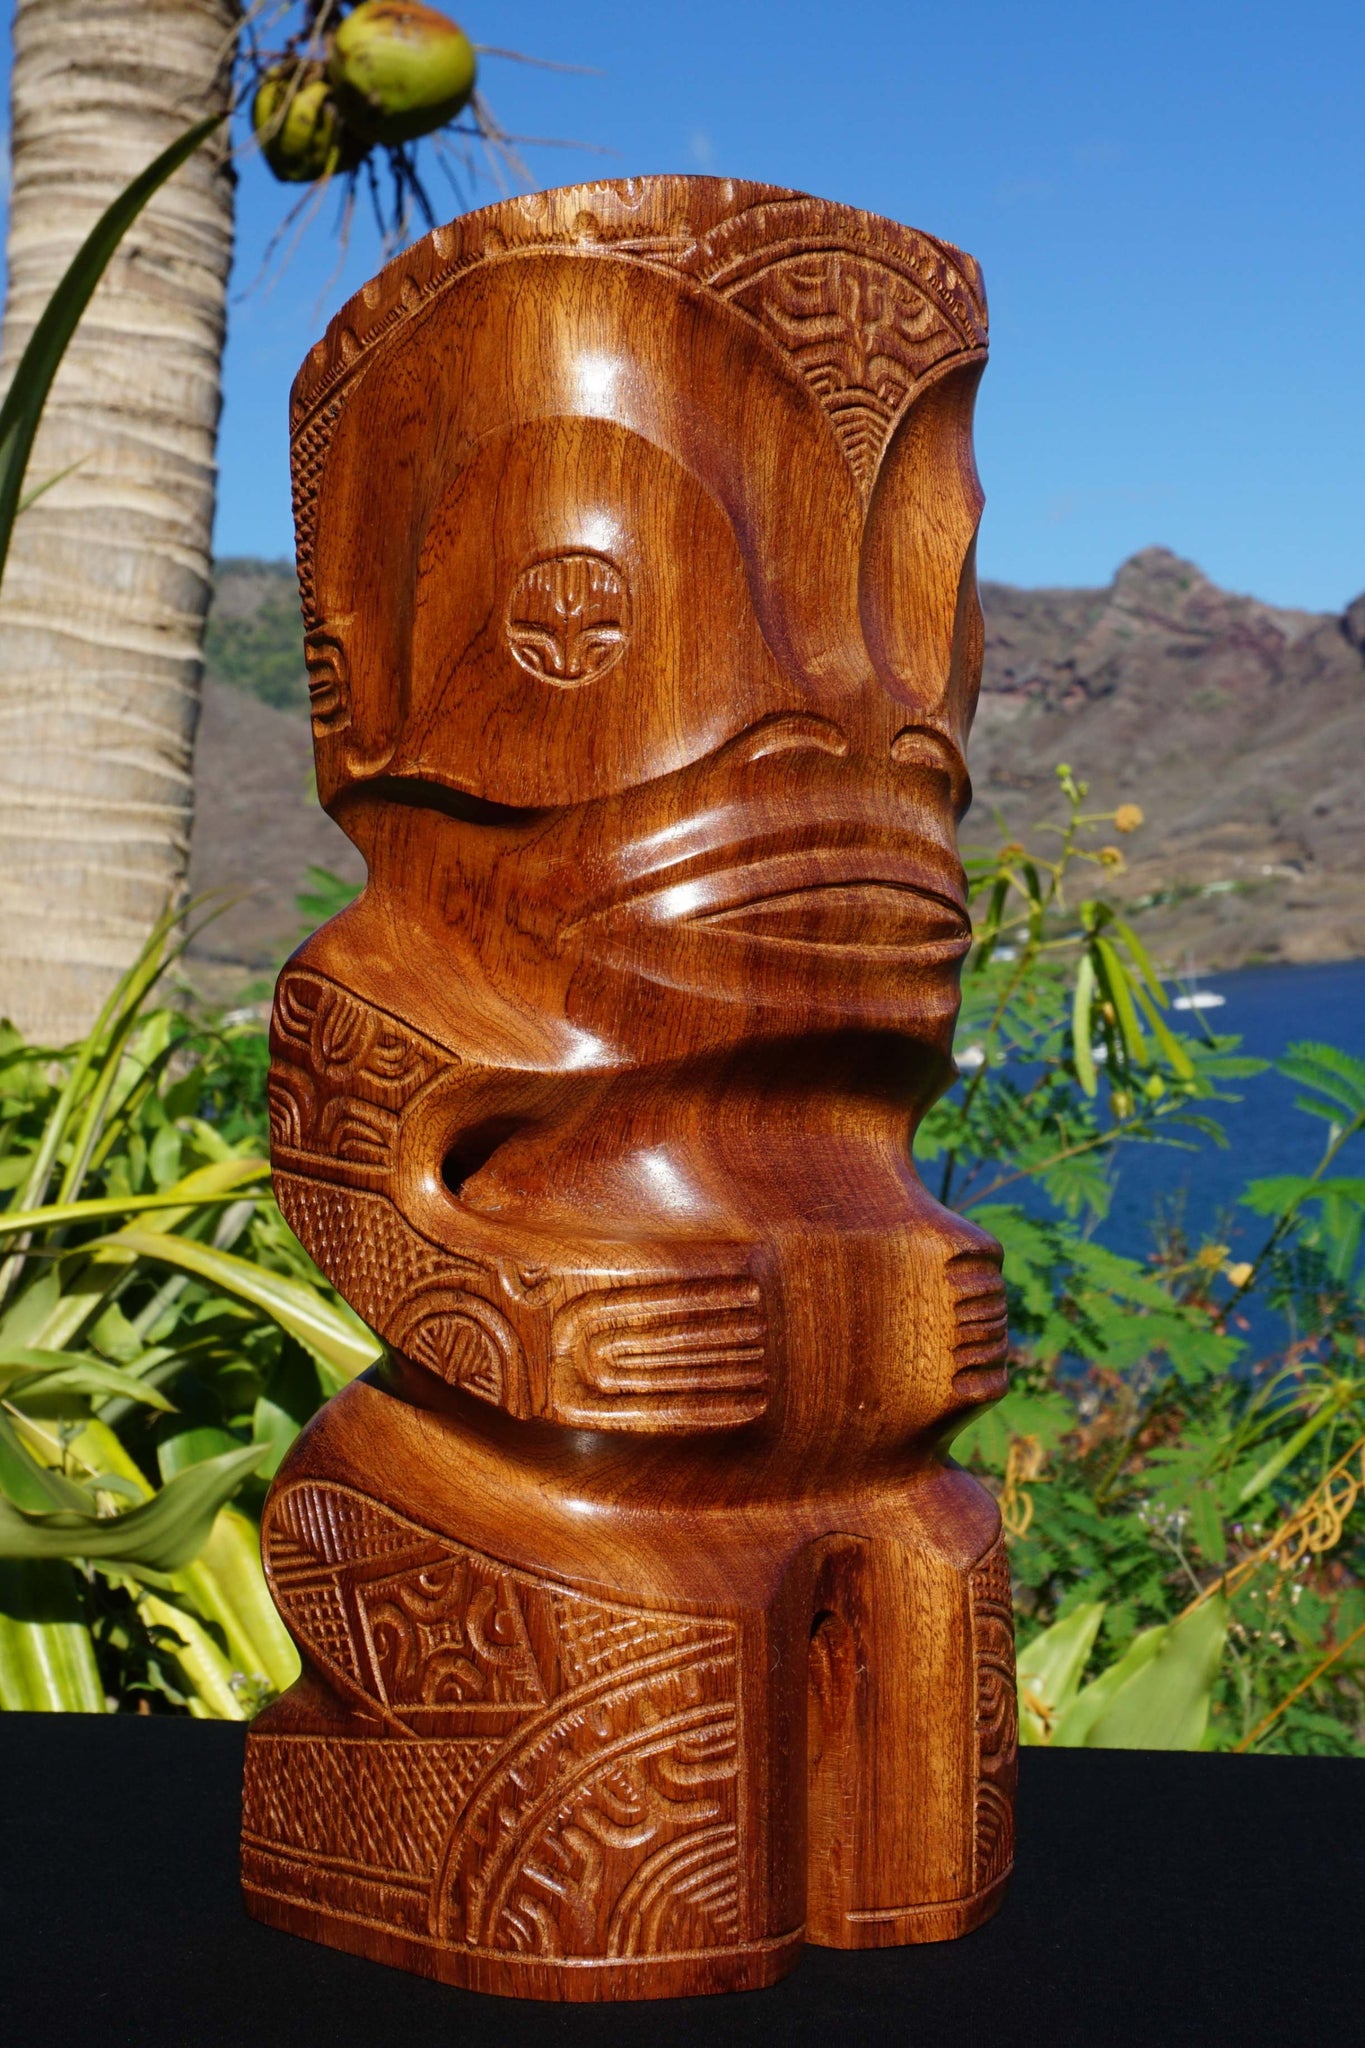 Marquesan Tiki sculpture from Nuku Hiva Island